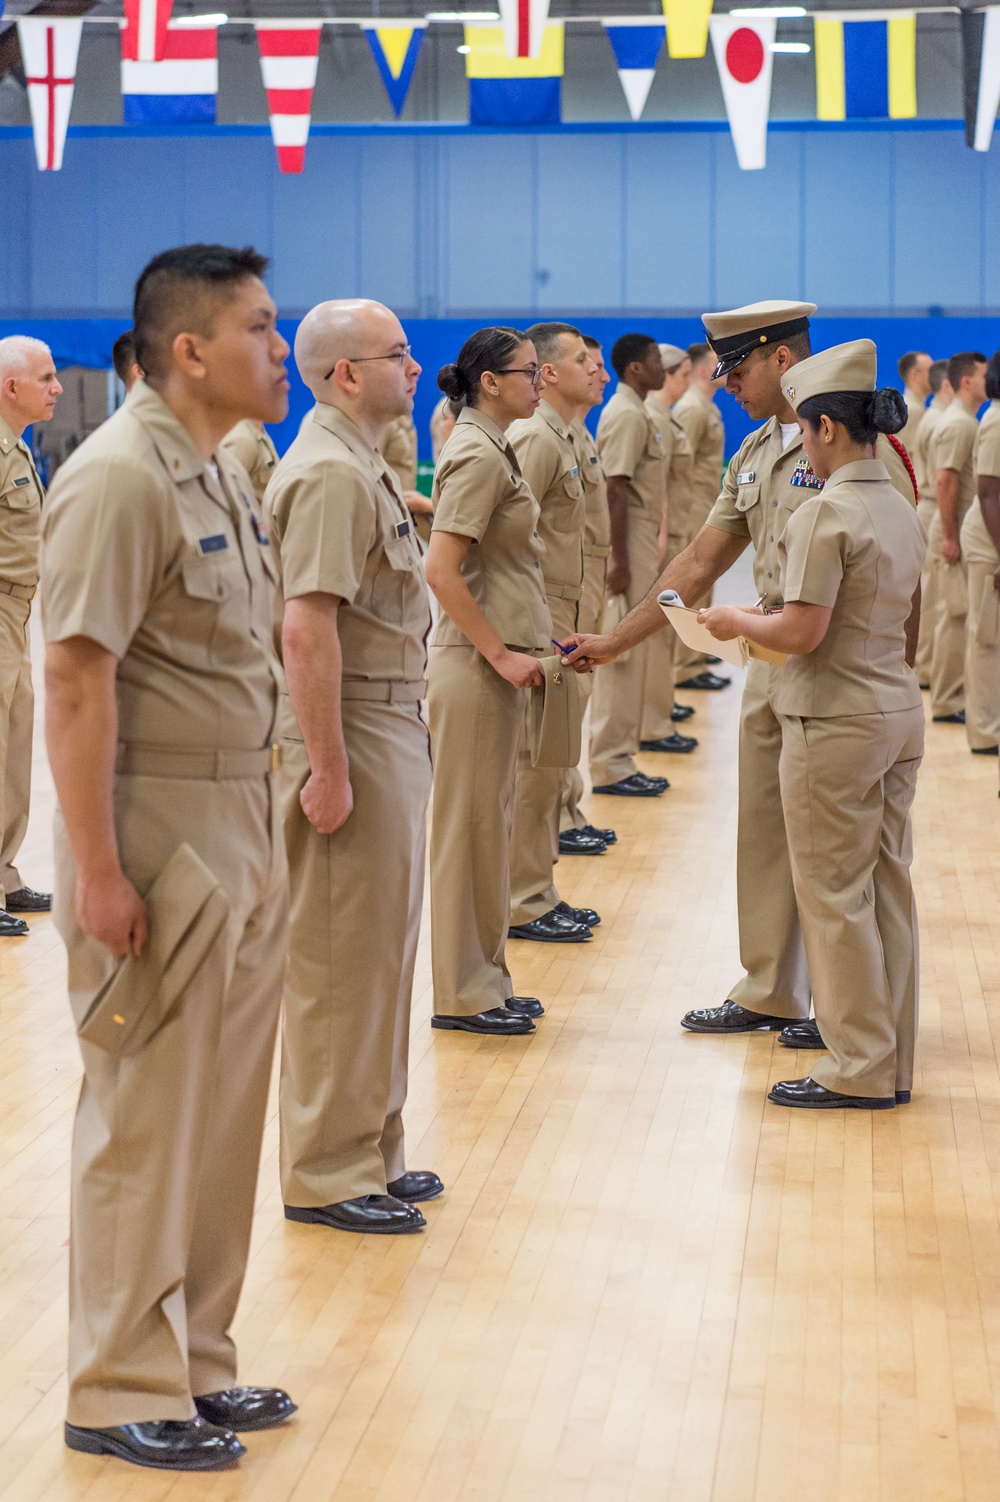 191107-N-TE695-0015 NEWPORT, R.I. (Nov. 7, 2019) -- Navy Officer Development School conducts a uniform inspection